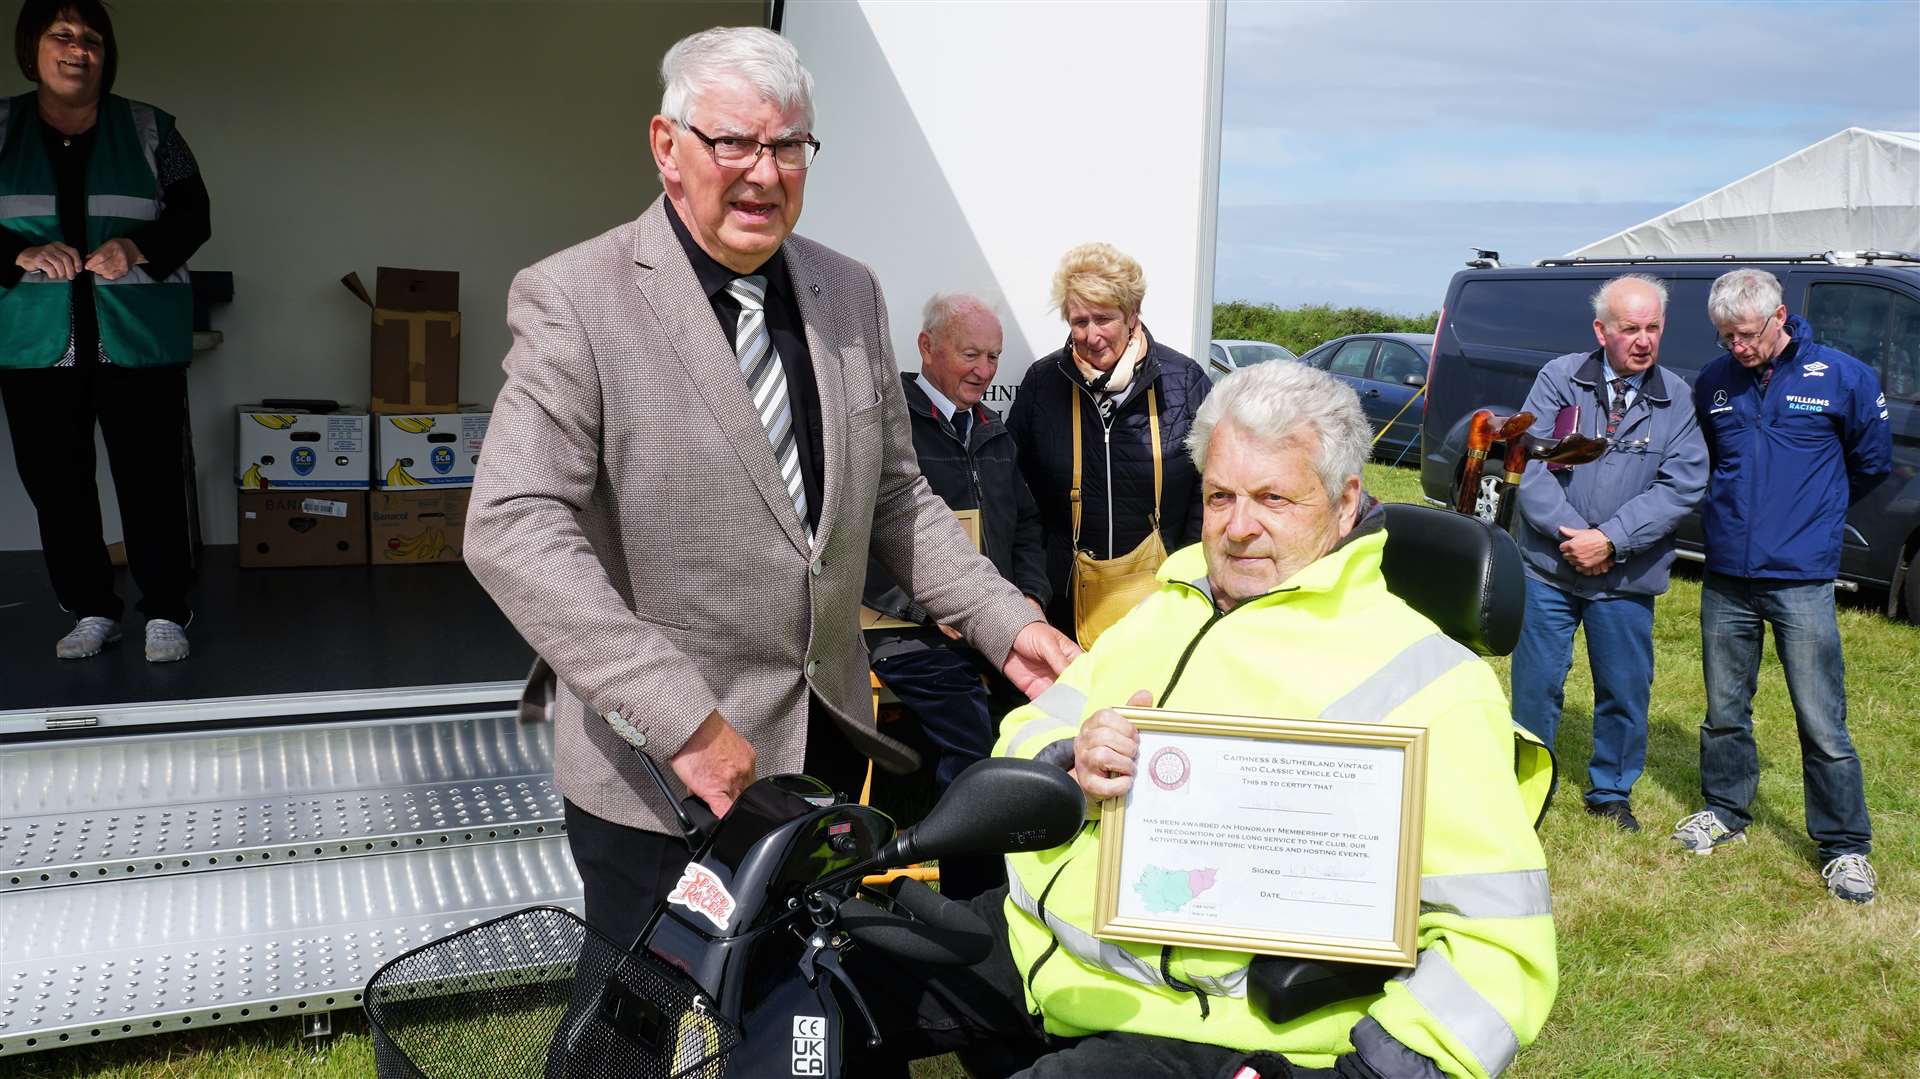 Iain Sutherland gives an honorary award to David Green from John O’ Groats.